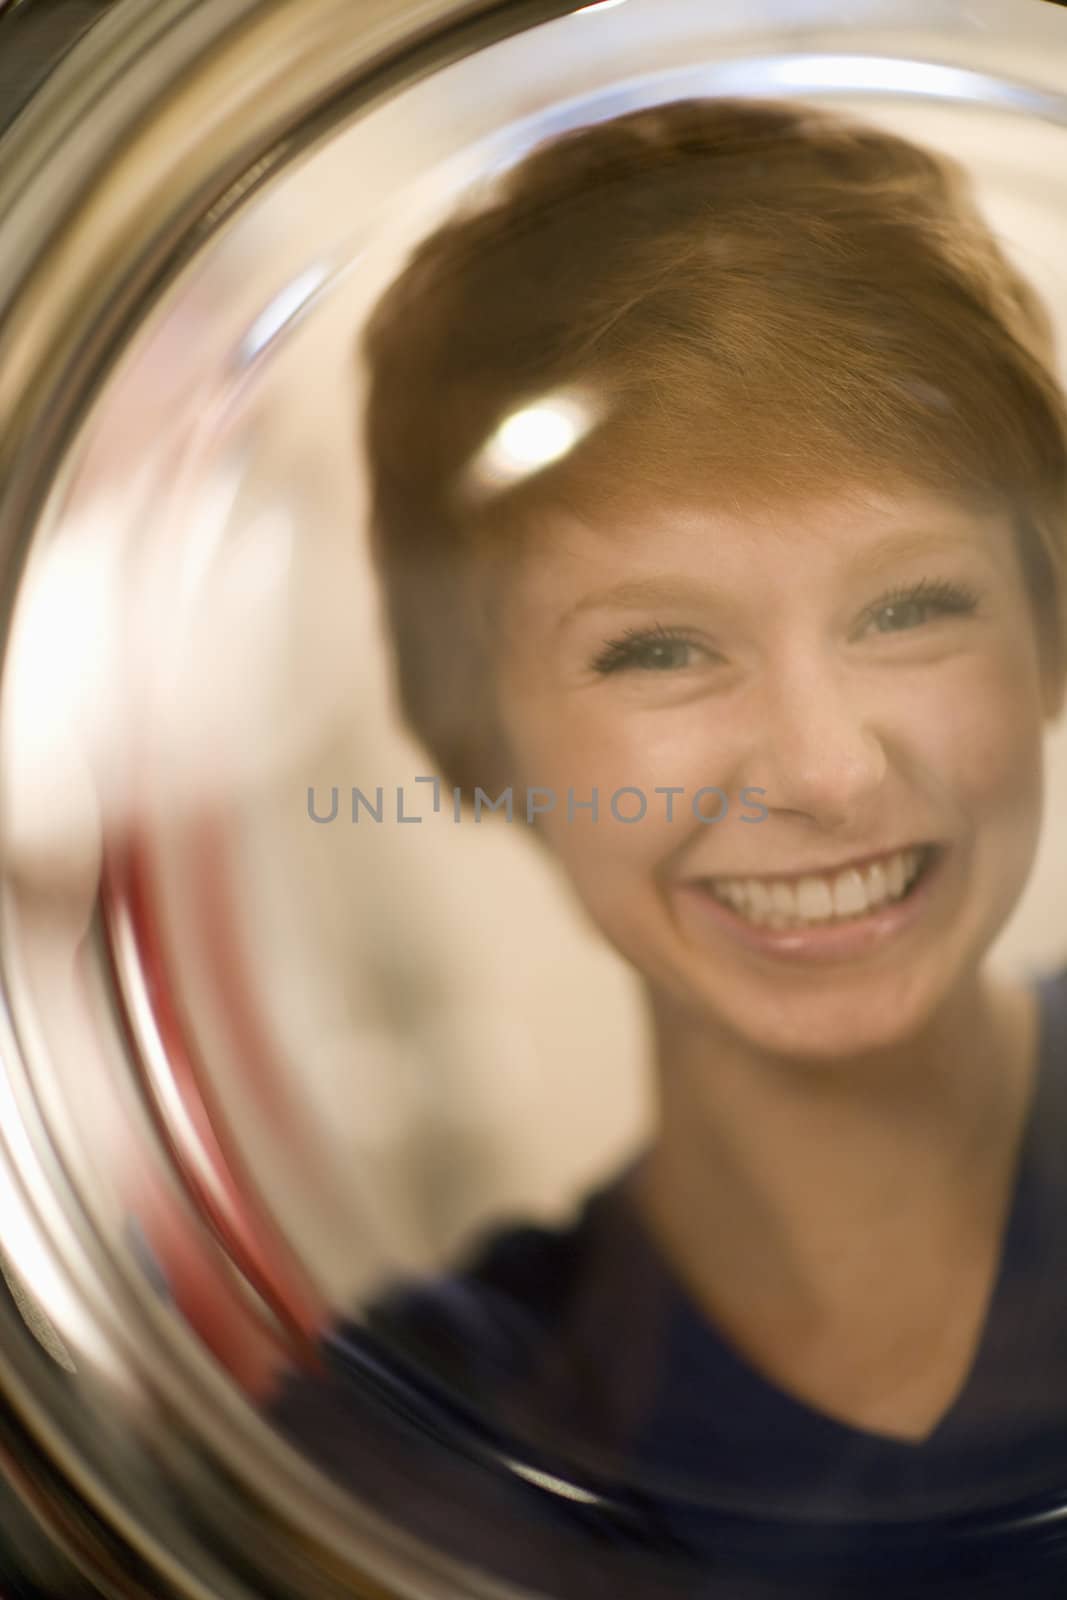 Smiling woman portrait through glass by edbockstock